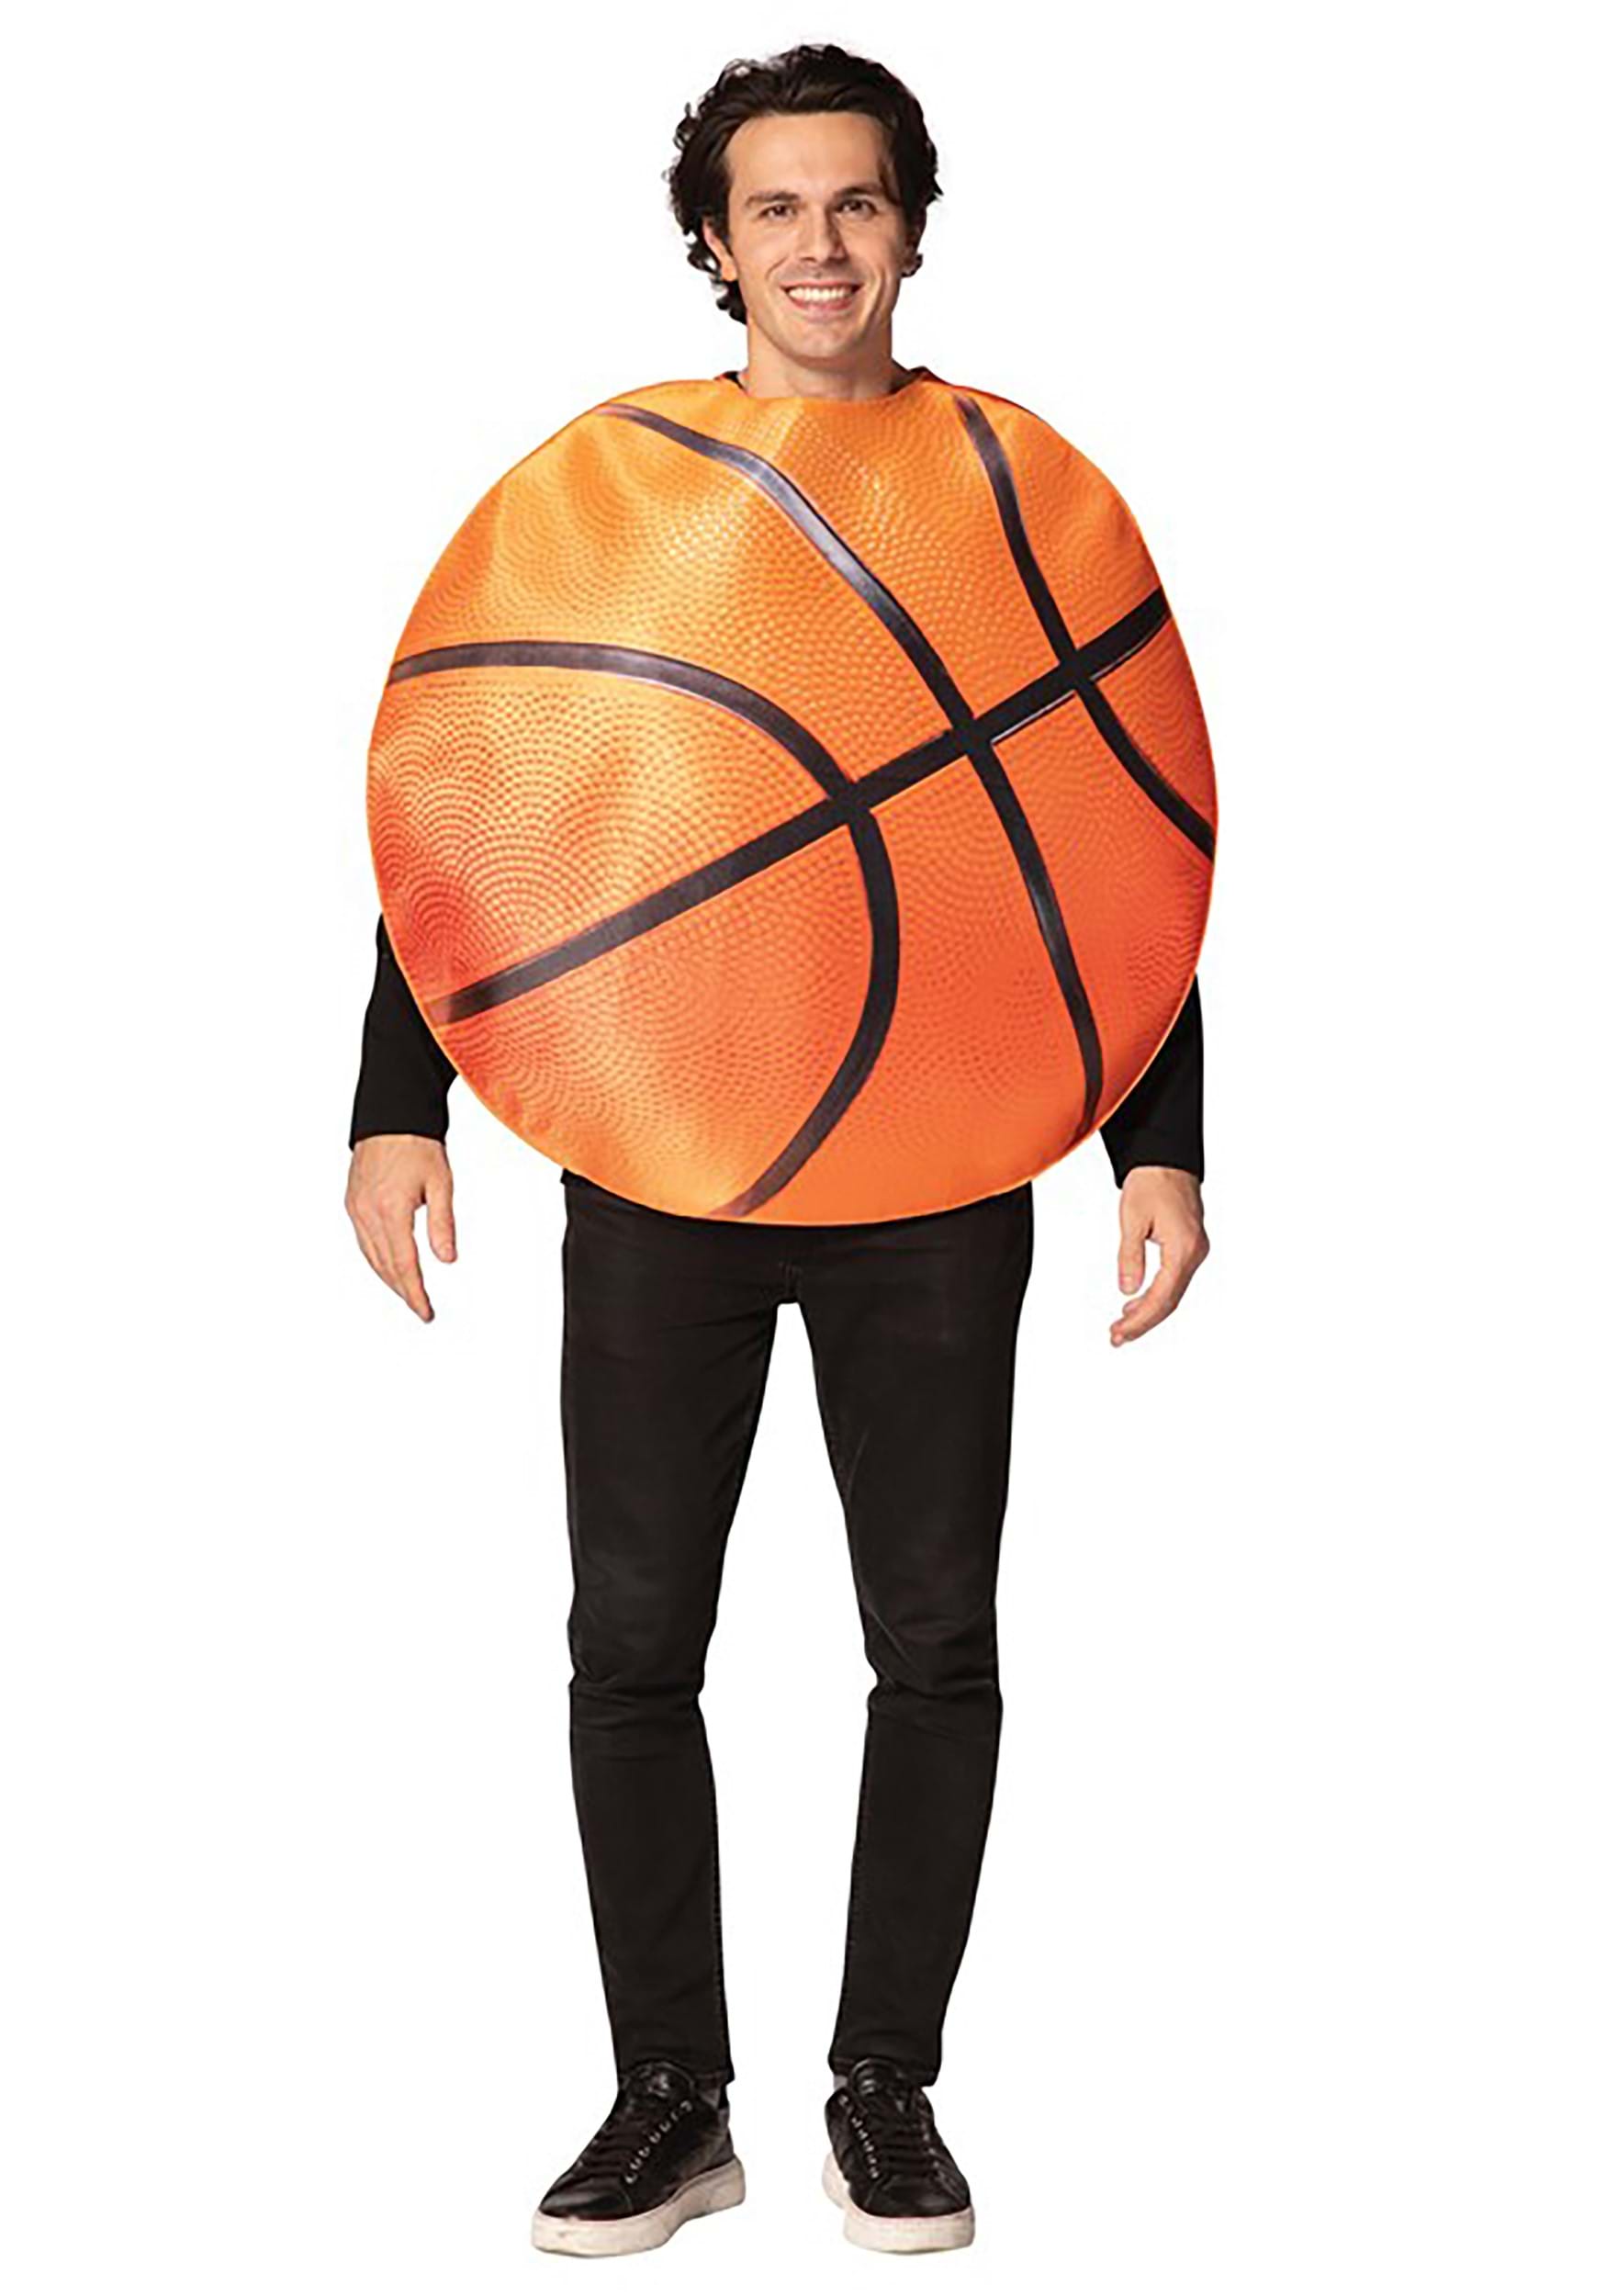 Basketball costumes